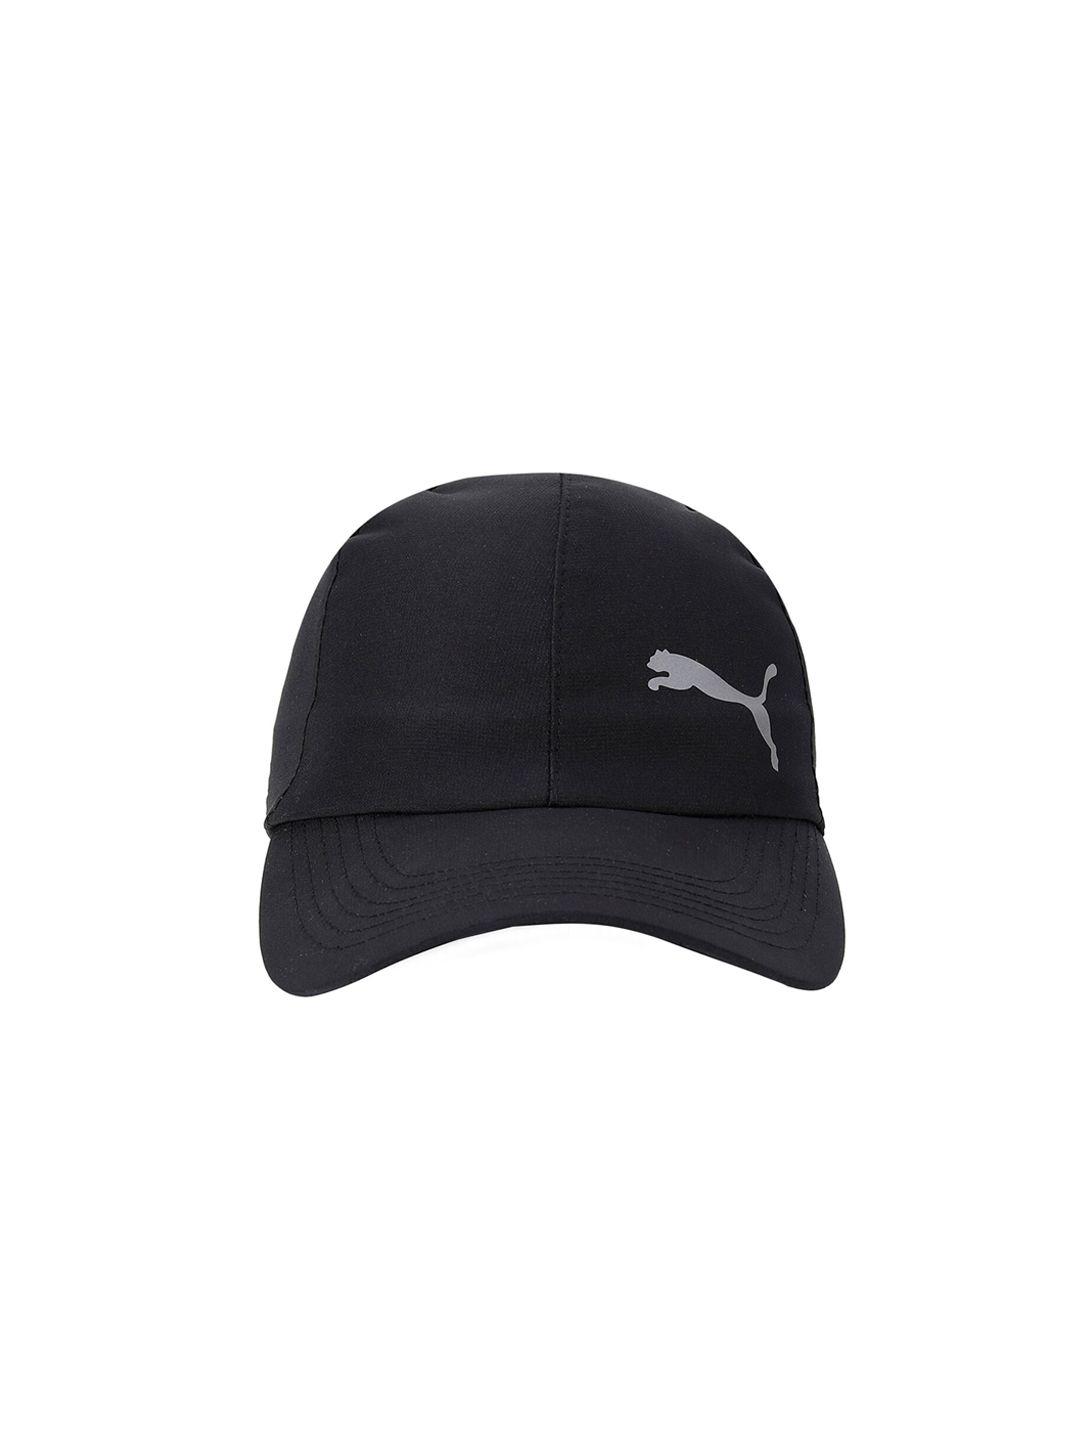 puma unisex black solid baseball cap